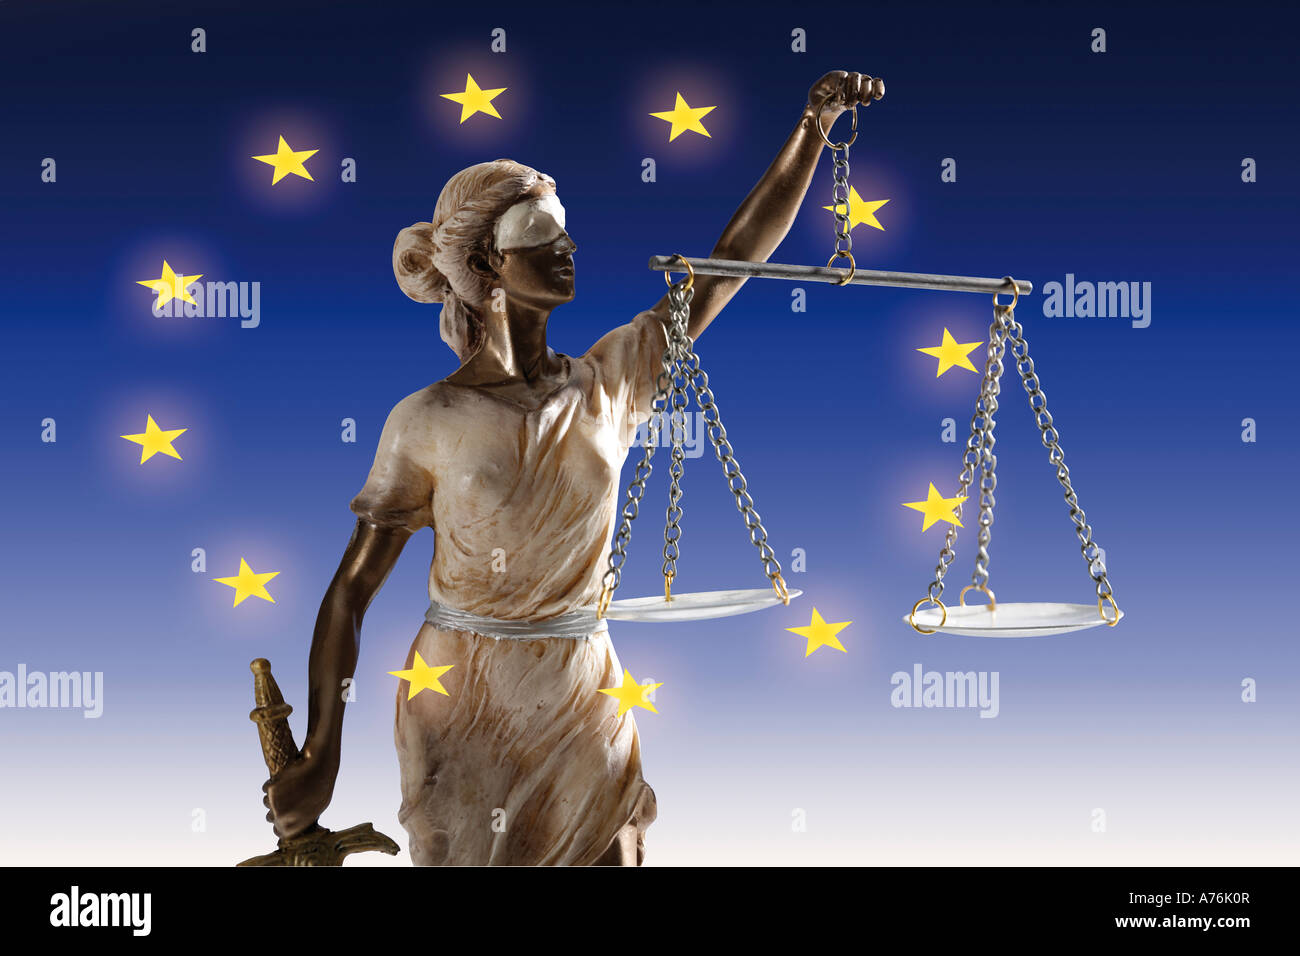 Justitia figurine in european flag, close-up Stock Photo